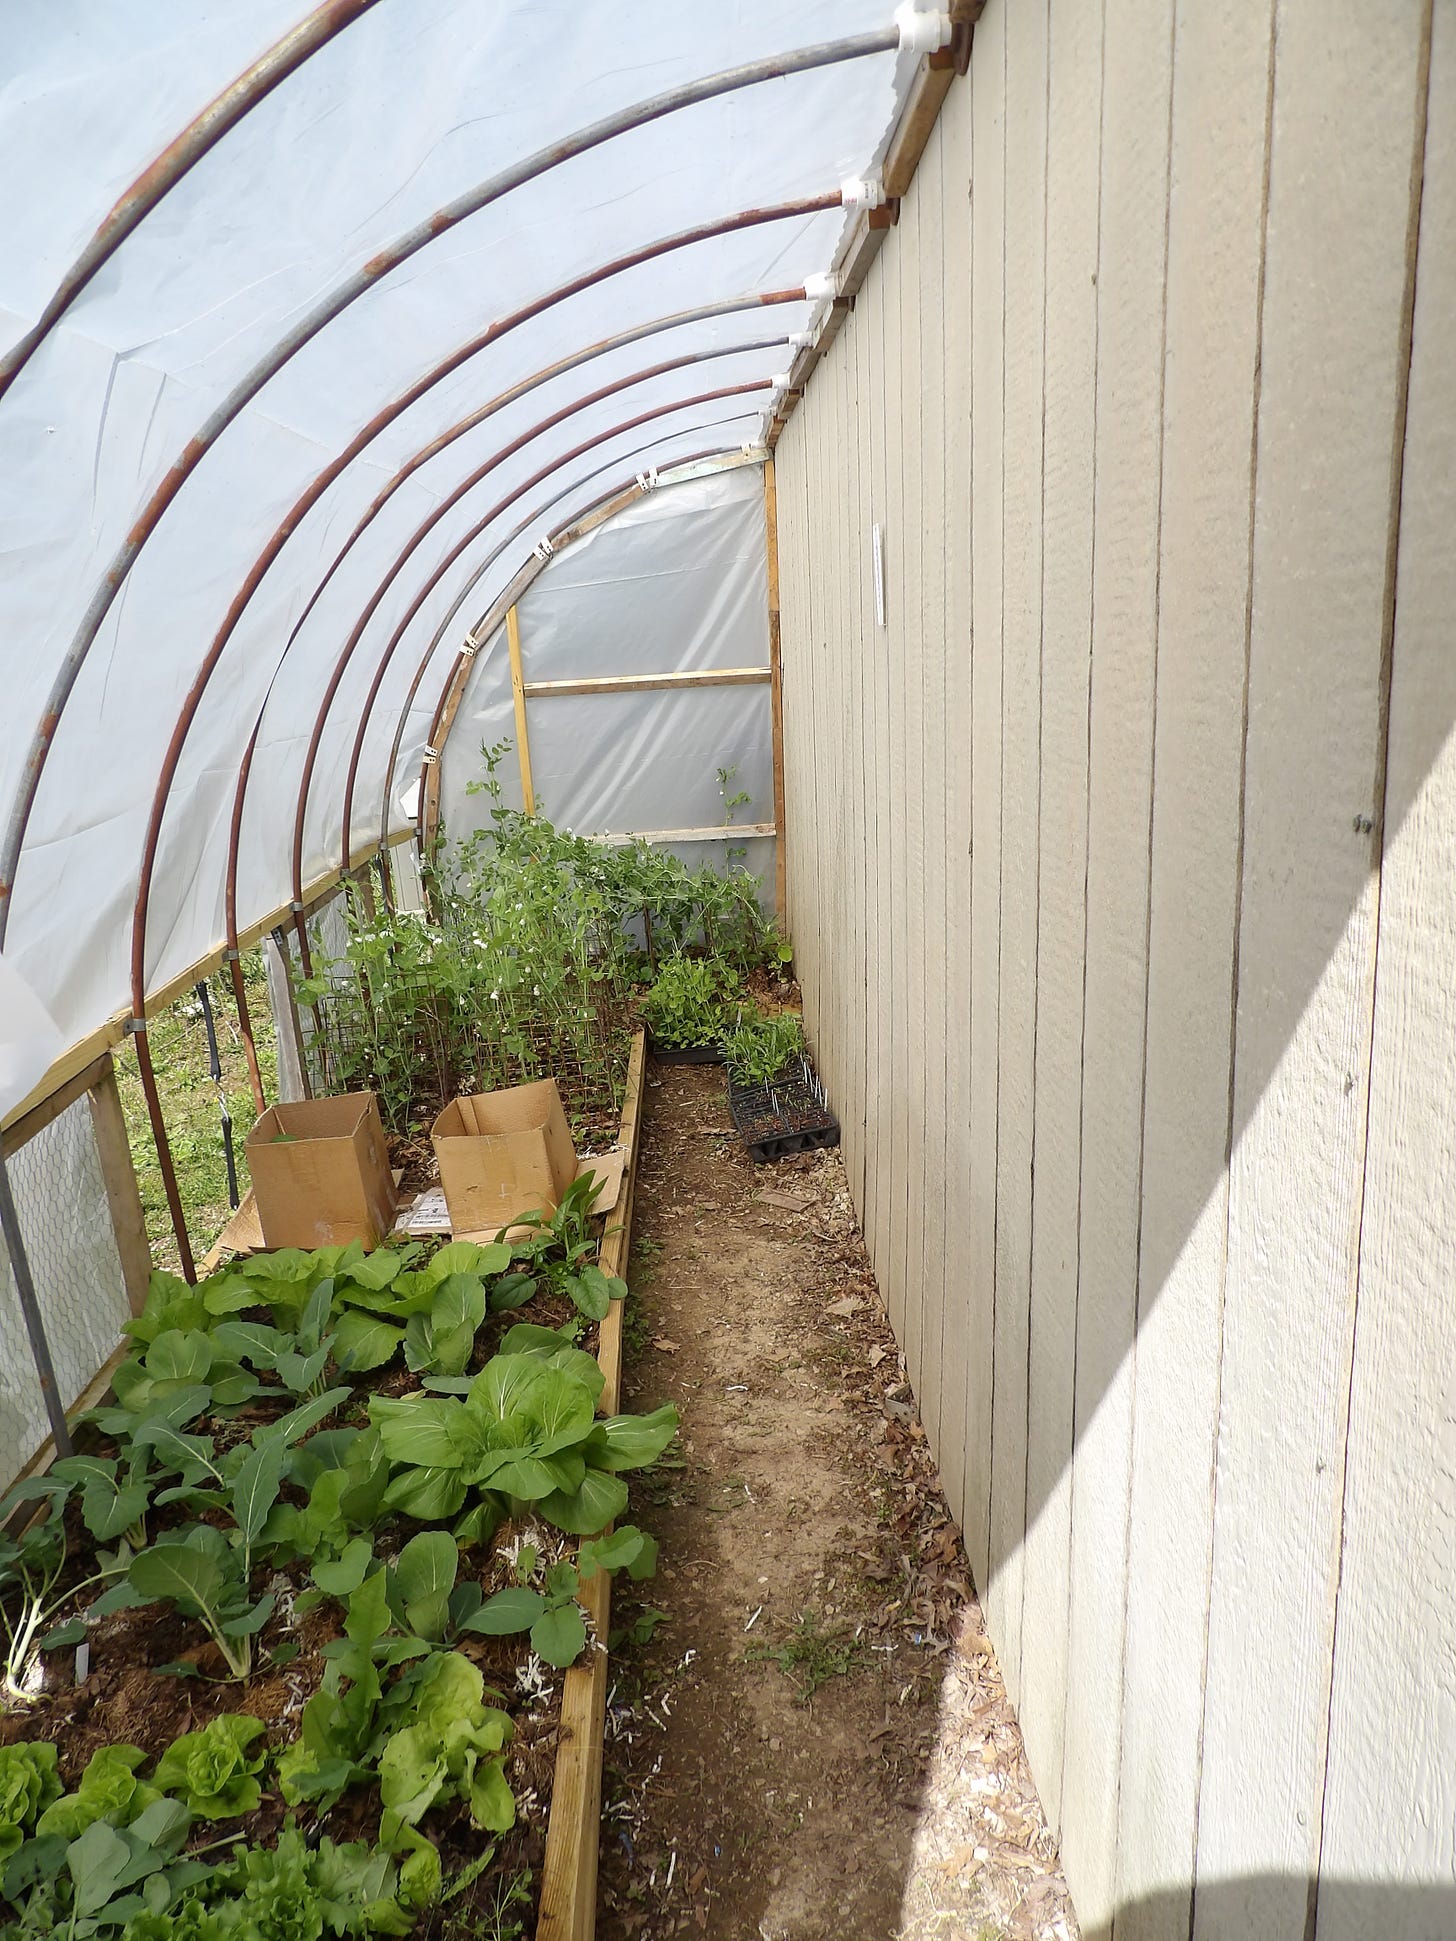 Greenhouse Full of Vegetable Plants